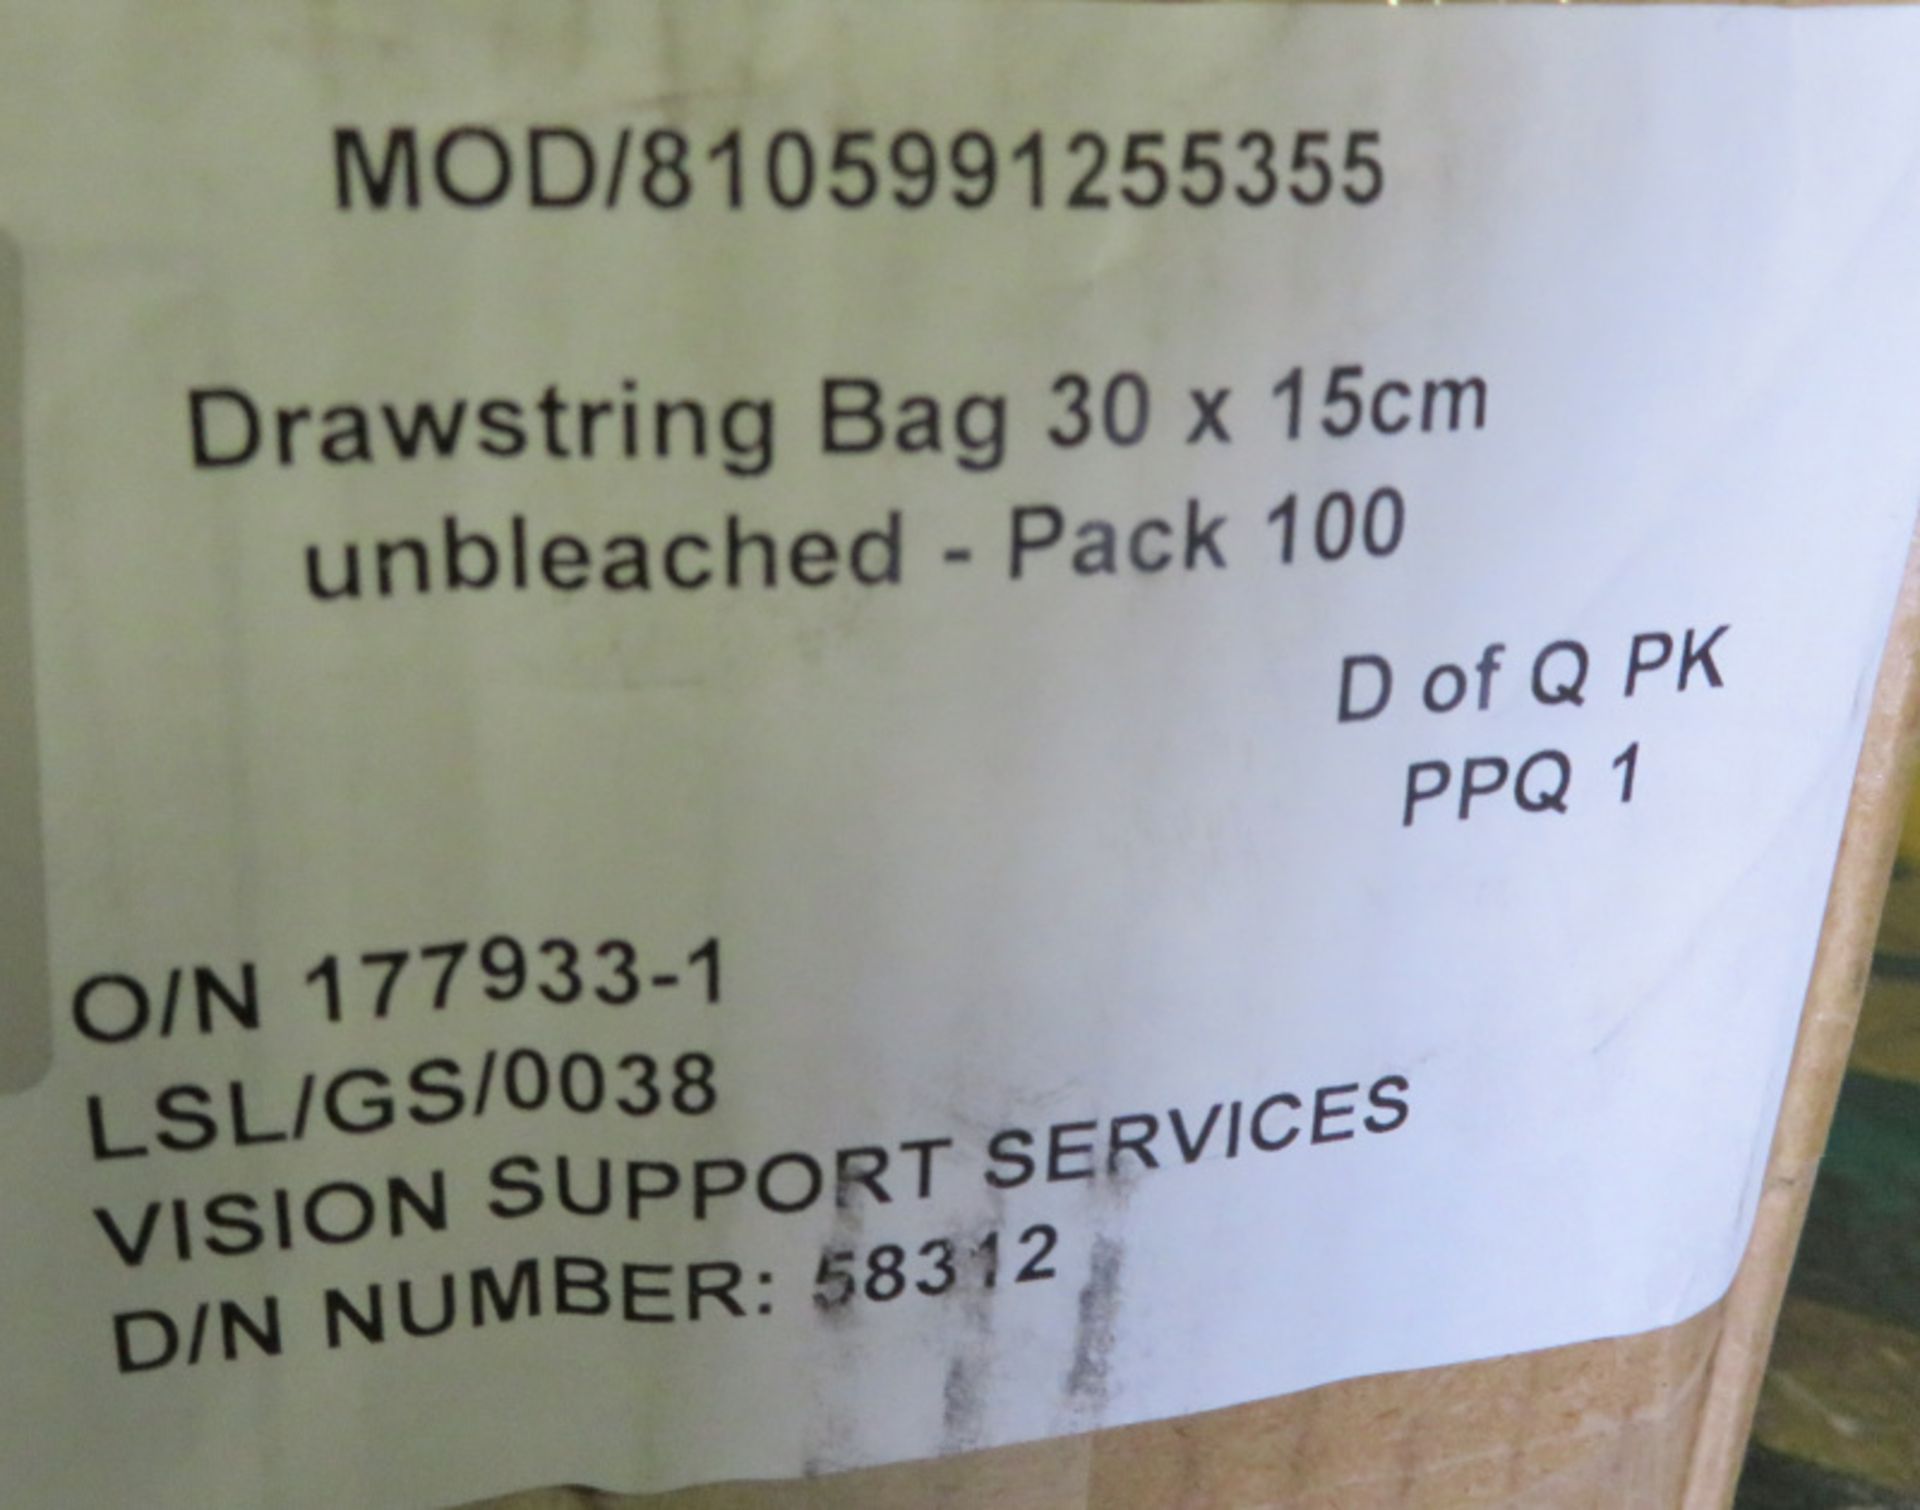 Drawstring Bags - 30 x 15cm - unbleached - 100 per bag - 3 bags per box - Image 3 of 3